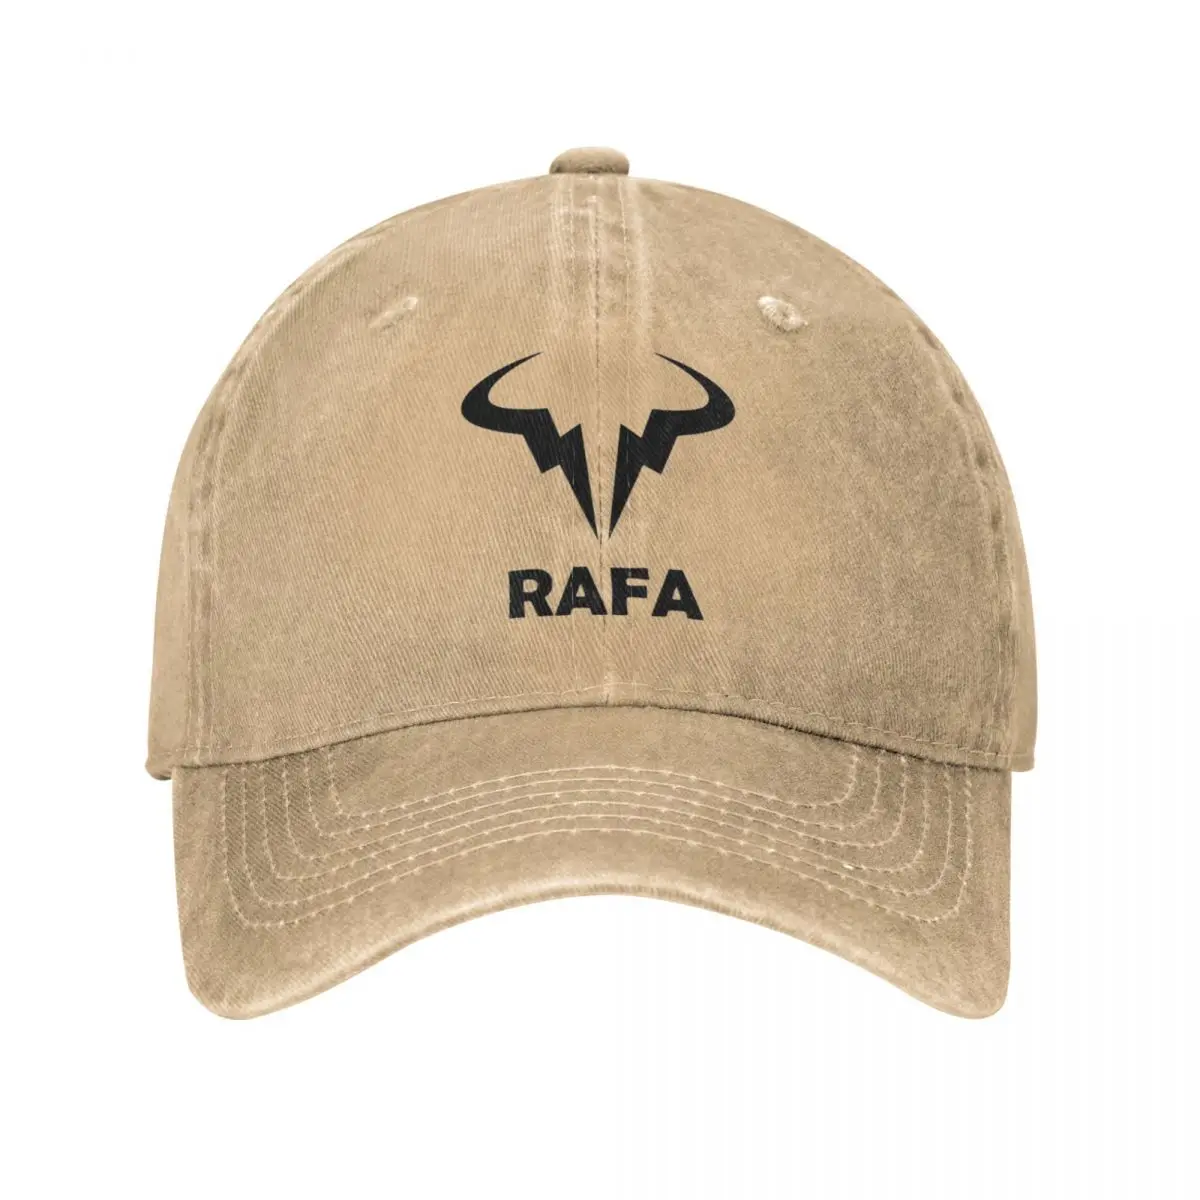 

Rafa Tennis Baseball Caps Classic Distressed Cotton Headwear Men Women Outdoor Workouts Adjustable Hats Cap